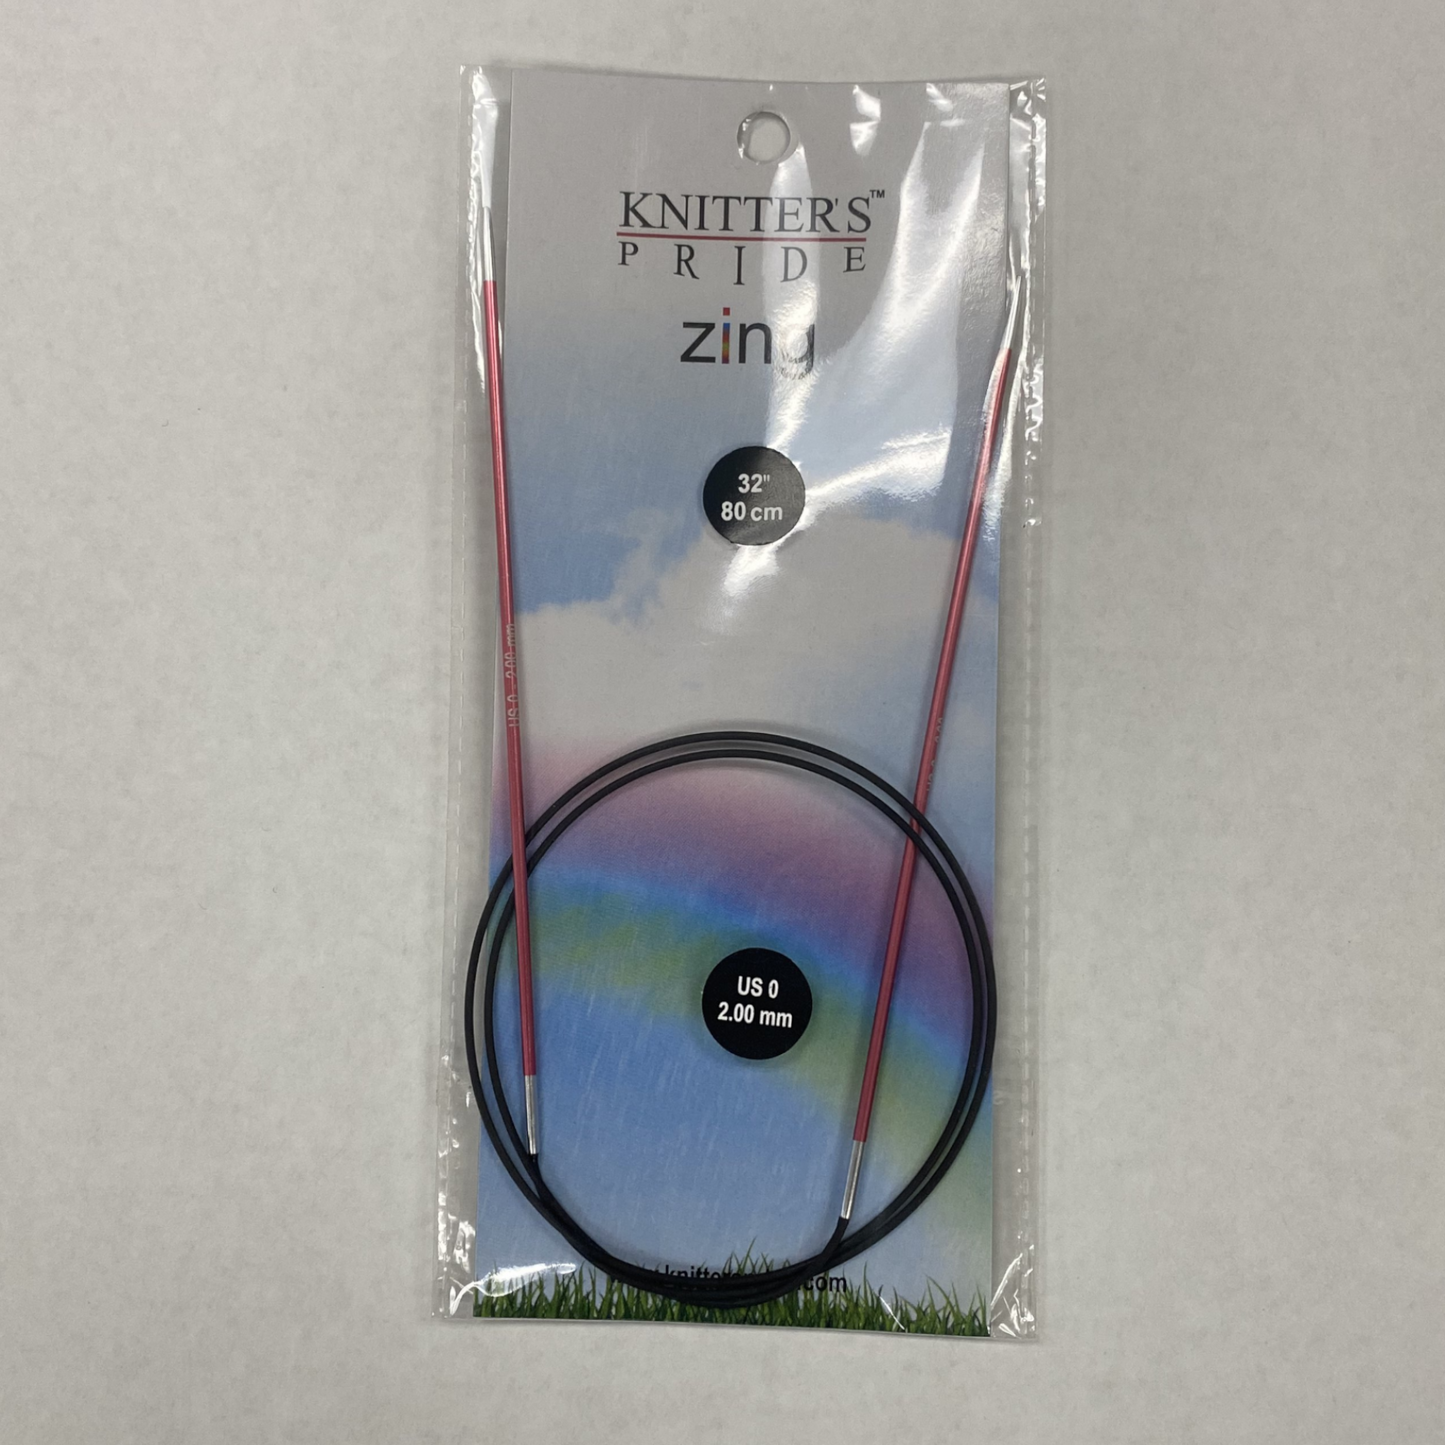 Knitter's Pride - Zing - US 0 / 2.00mm Fixed Circular Needles